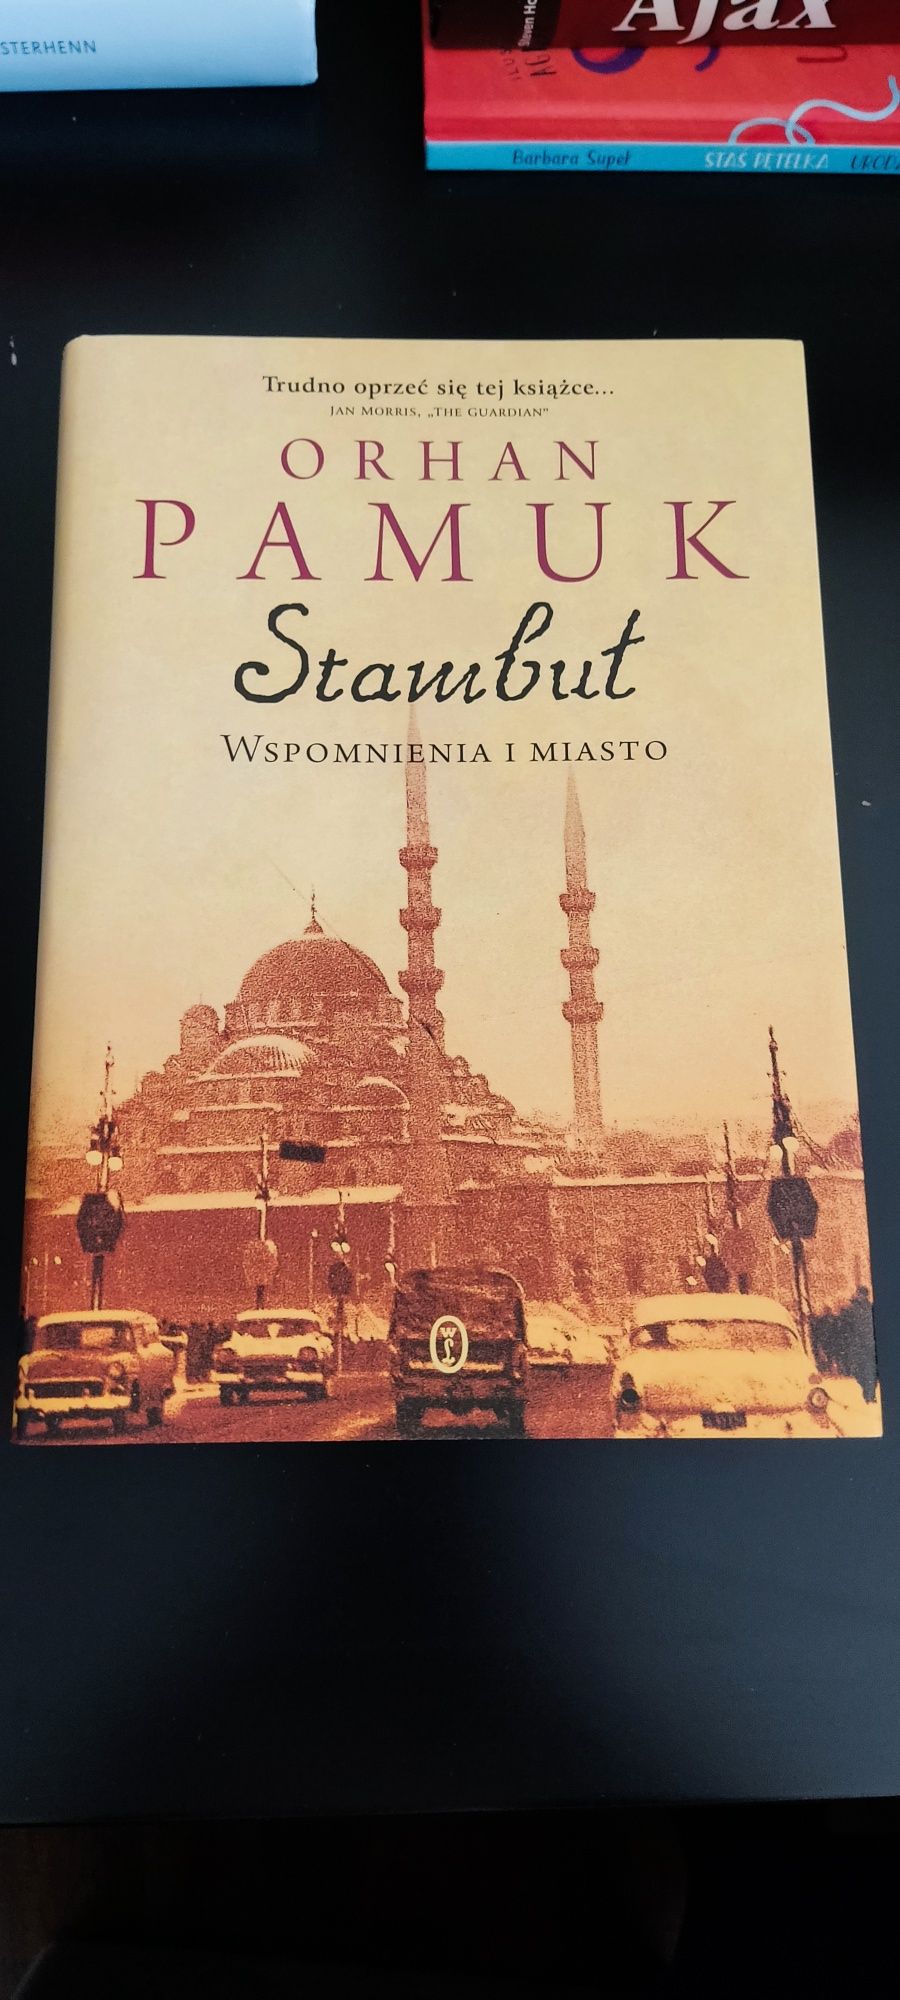 Orhan Pamuk "Stambuł wspomnienia i miasto"